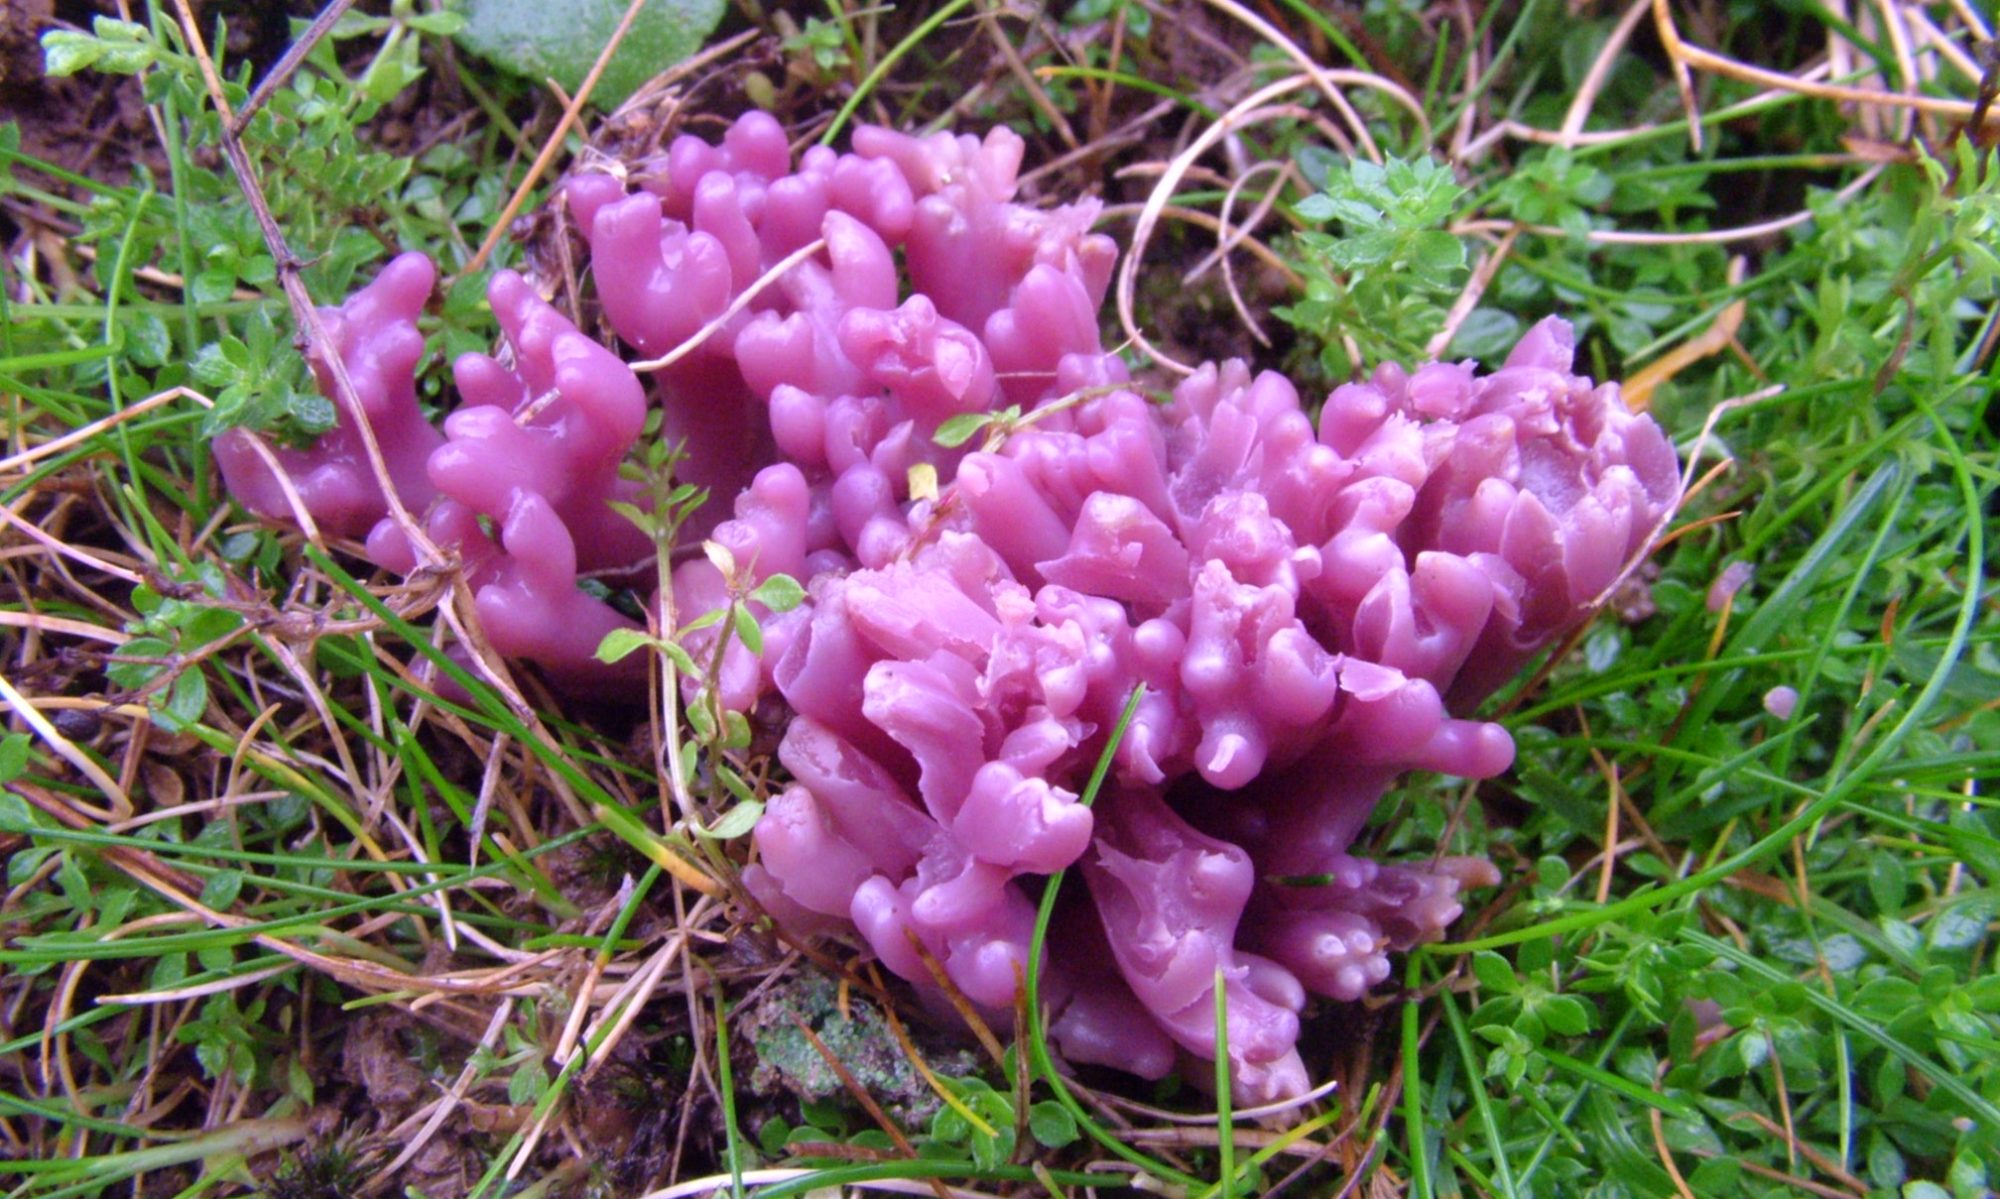 Northern Ireland Fungus Group